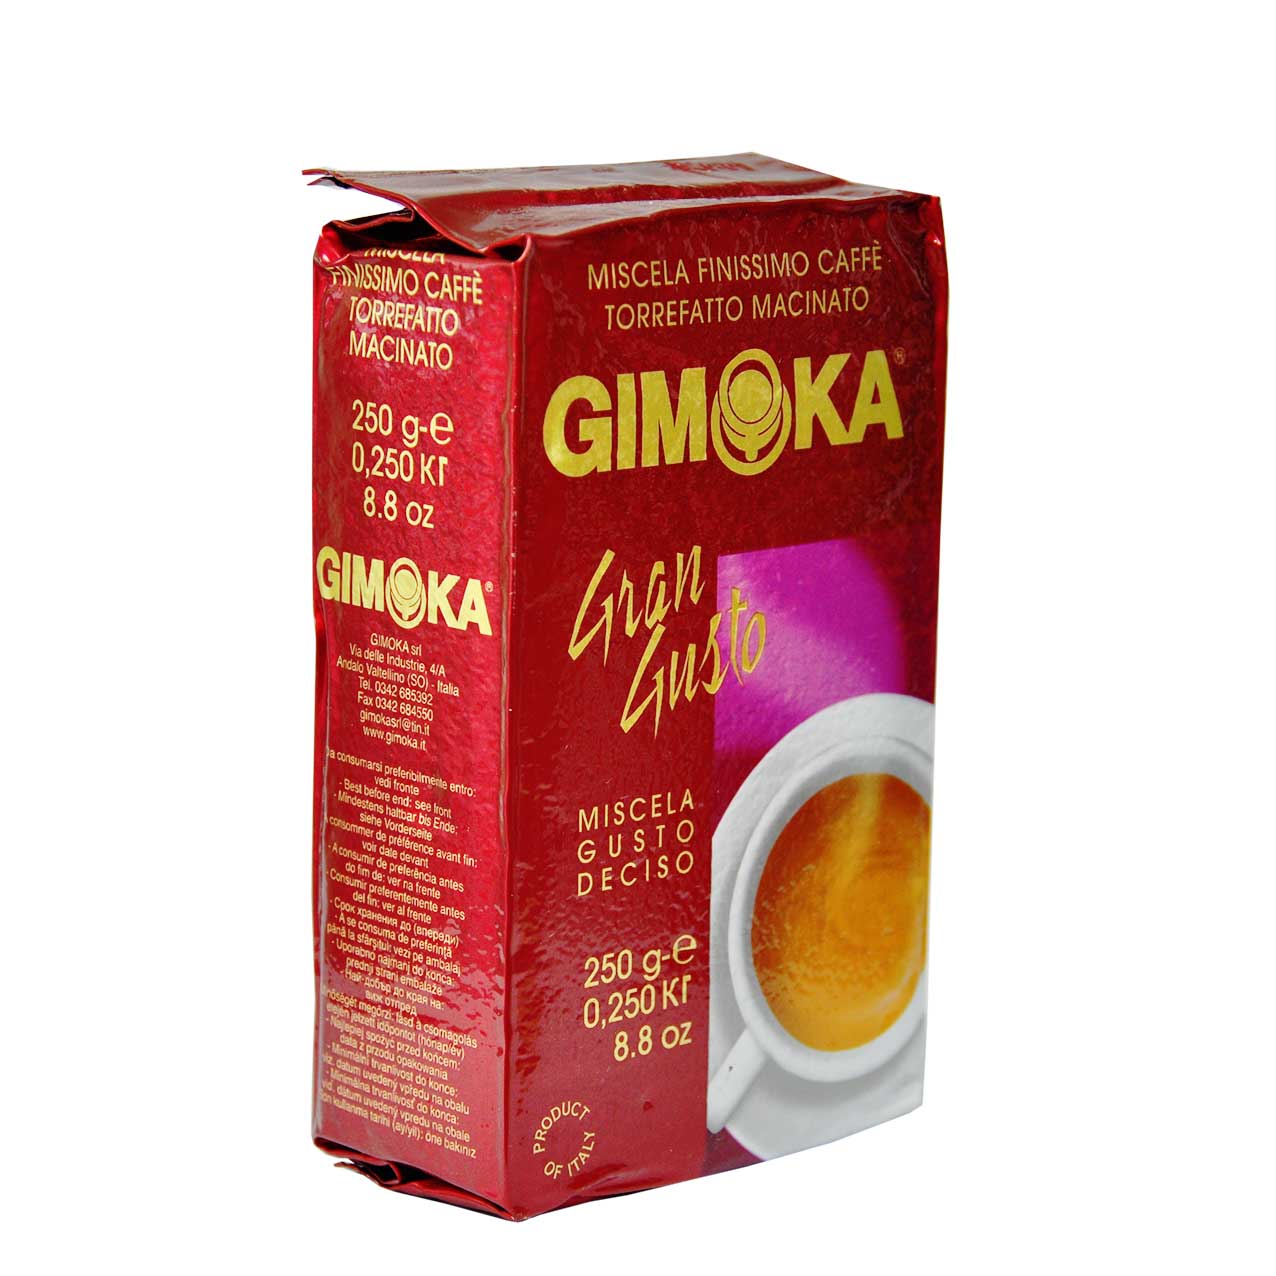 قهوه اسپرسو 20-80 جیموکا